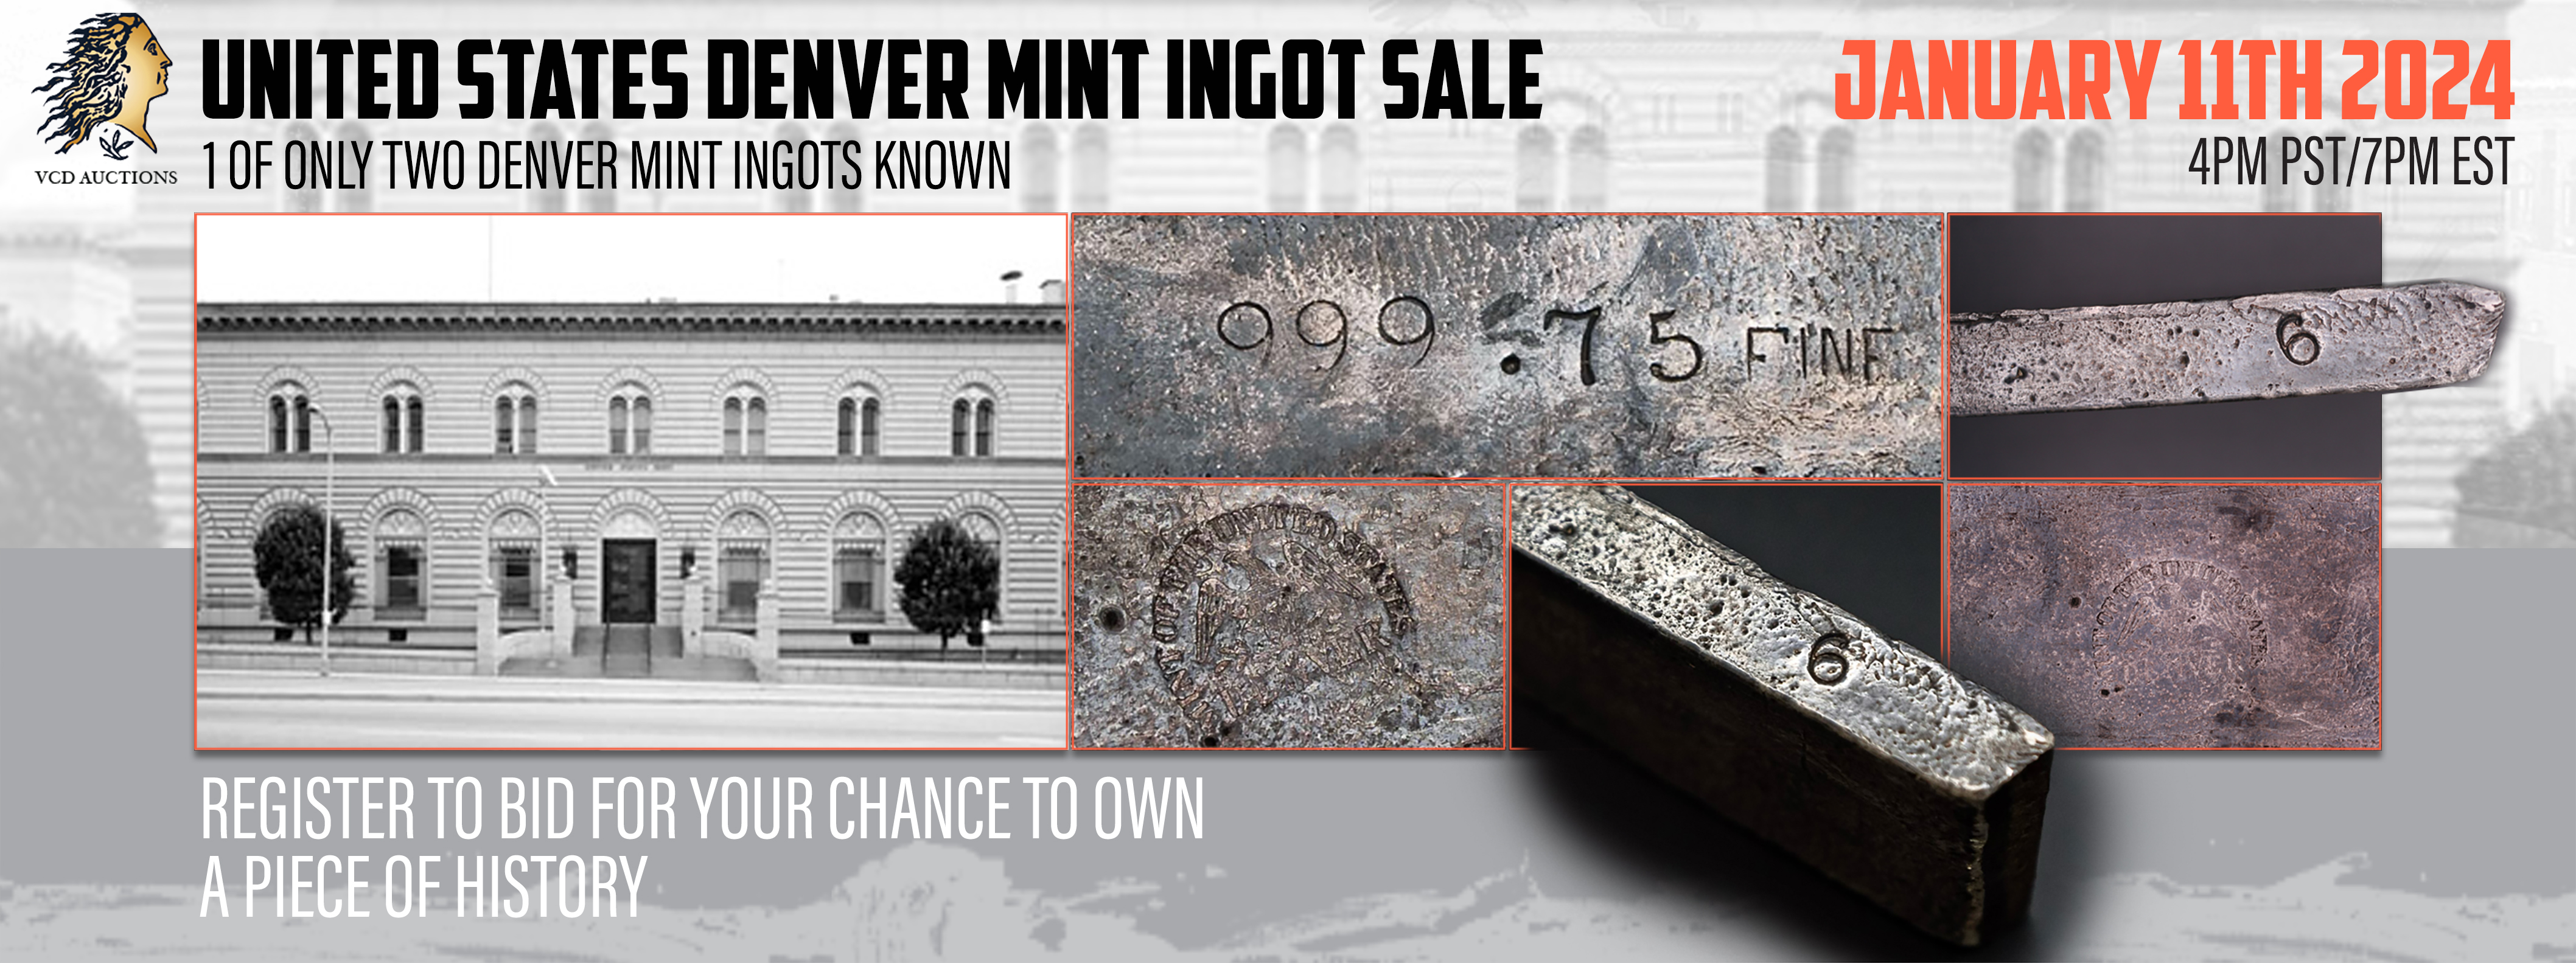 https://bidnow.vegascoindealer.com/Listing/Details/198158/Exceedingly-Rare-Only-Available-Denver-Mint-Assay-Bar-Silver-Poured-Ingot